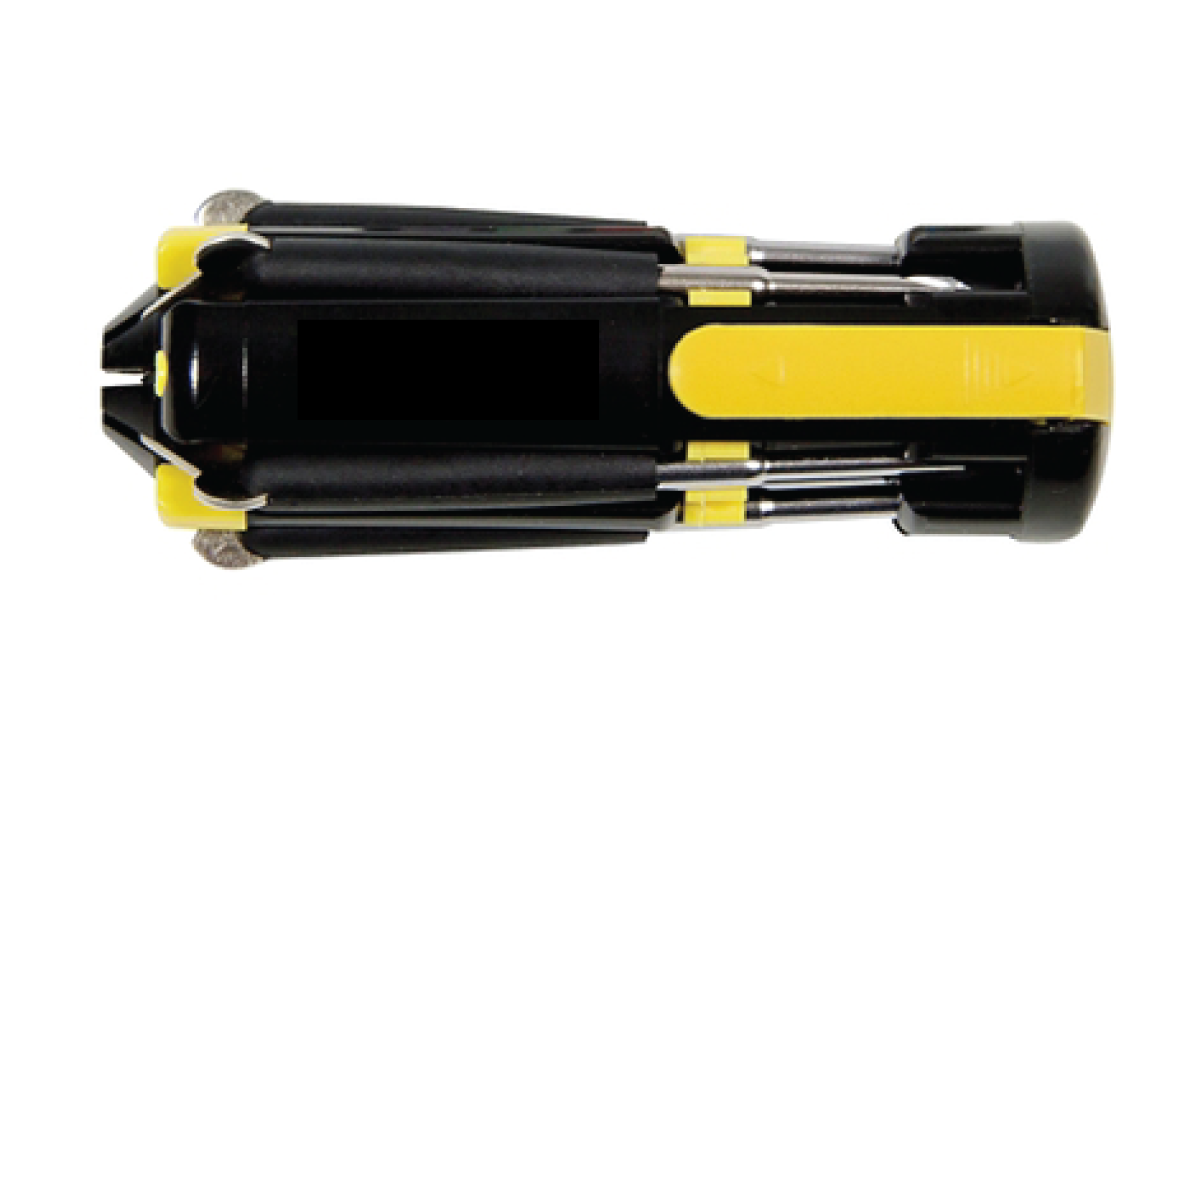 Black/Yellow Spyder 8-in-1 Multi Tool